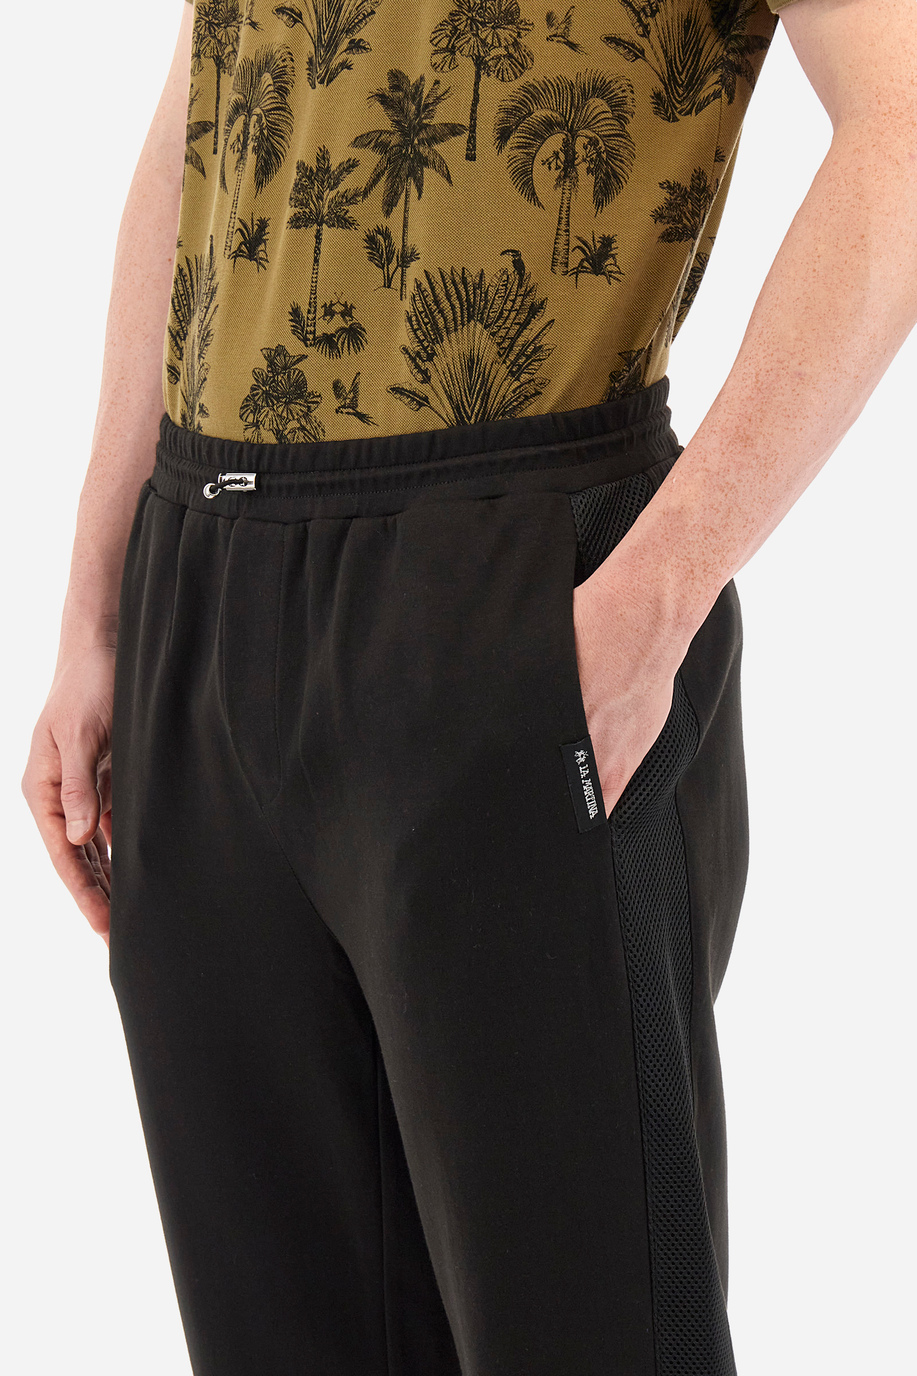 Pantalón jogging en mezcla de algodón de corte recto - Yke - Pantalones | La Martina - Official Online Shop